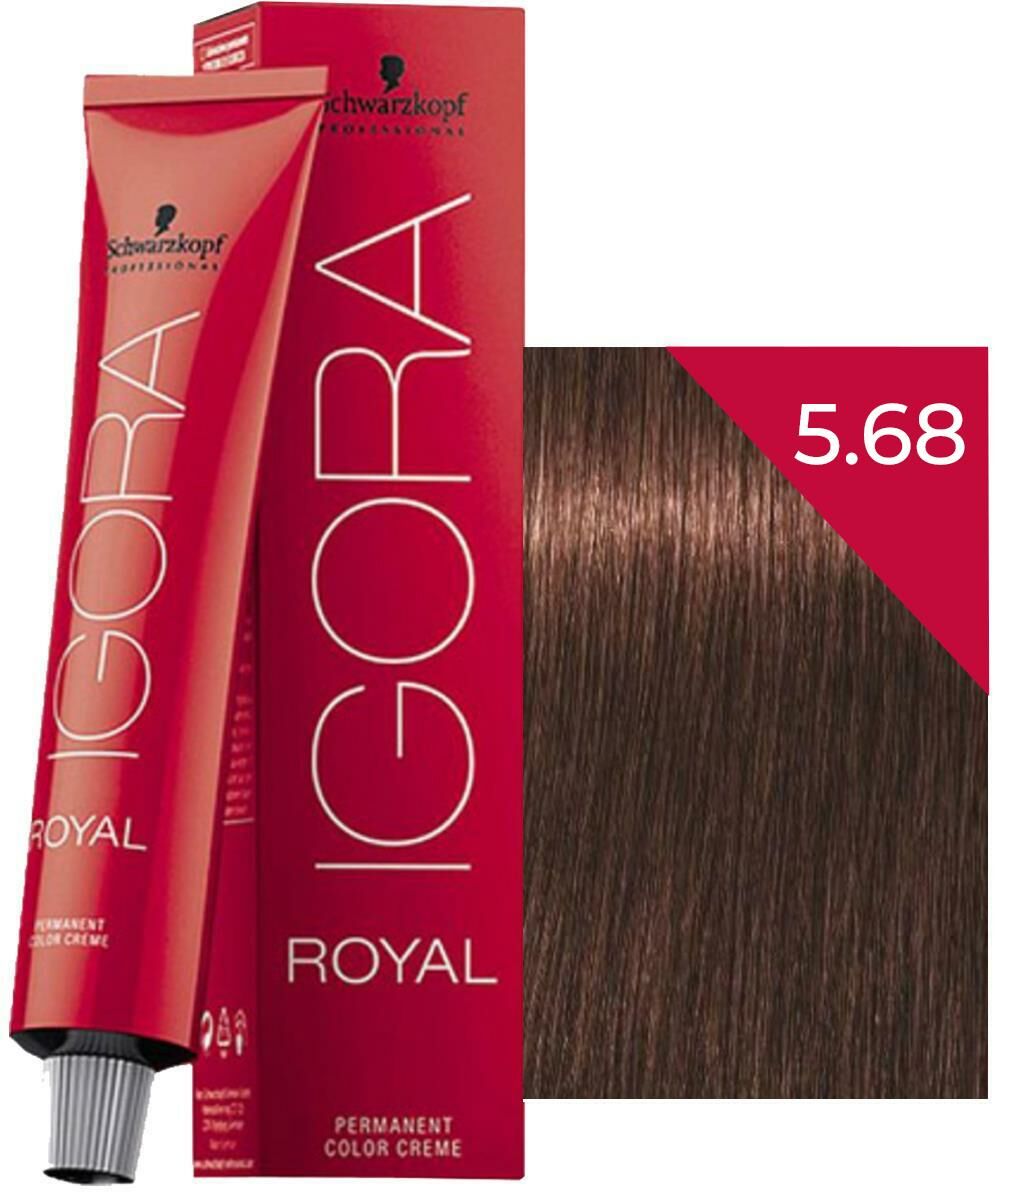 Schwarzkopf Igora Royal Saç Boyası 5.68 Açık Kahve Çikolata Kızıl 60 ml